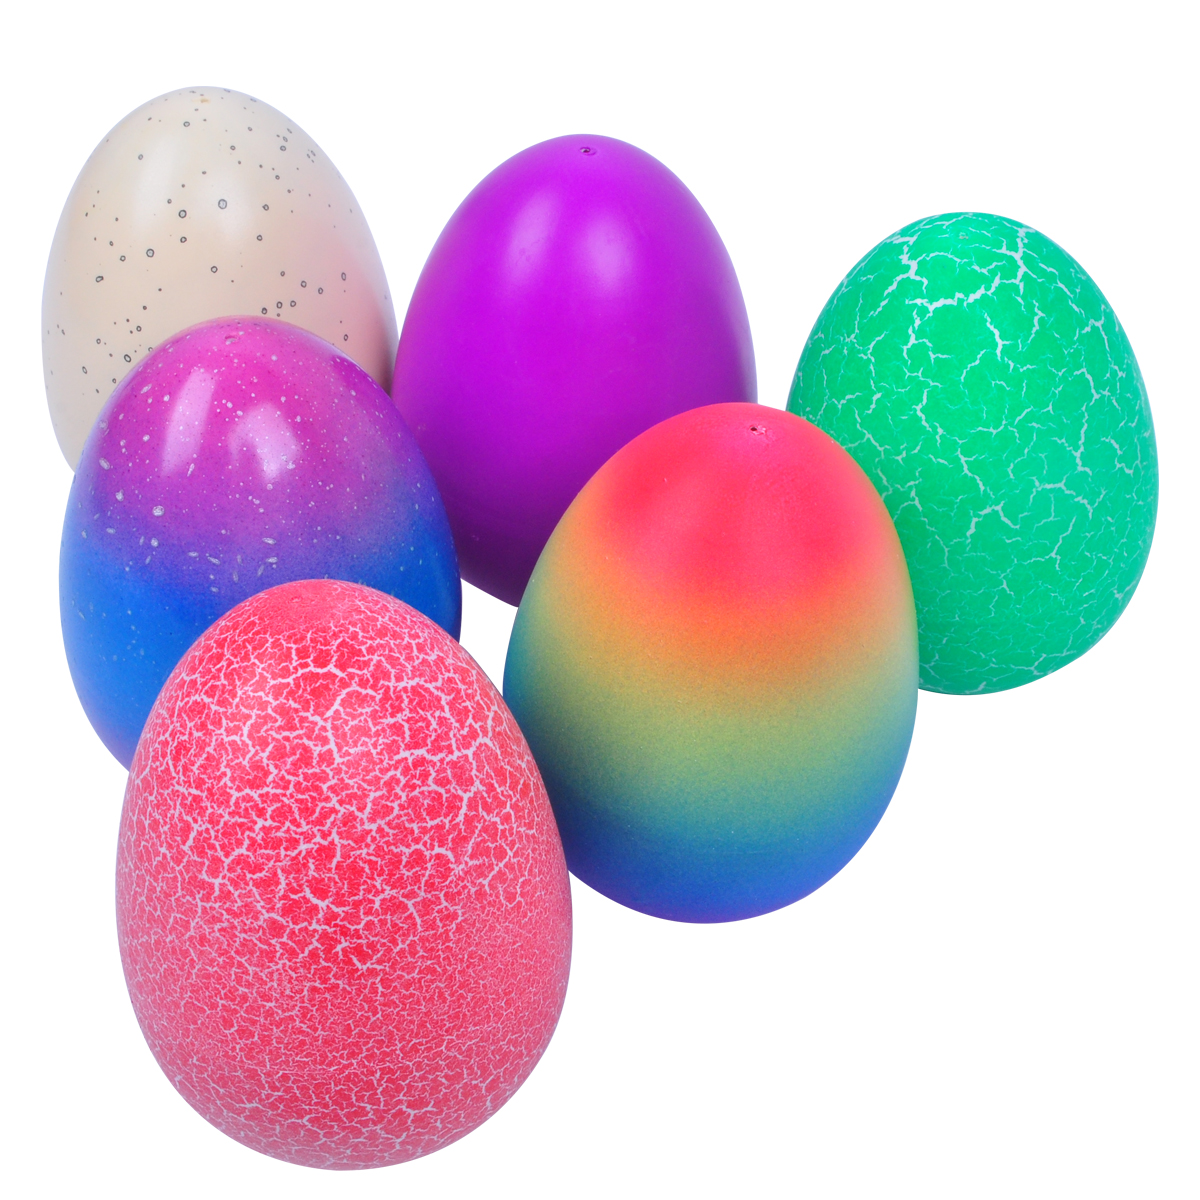 Product Description: Unicorn Hatching Egg – Rainbow Color Eggshell